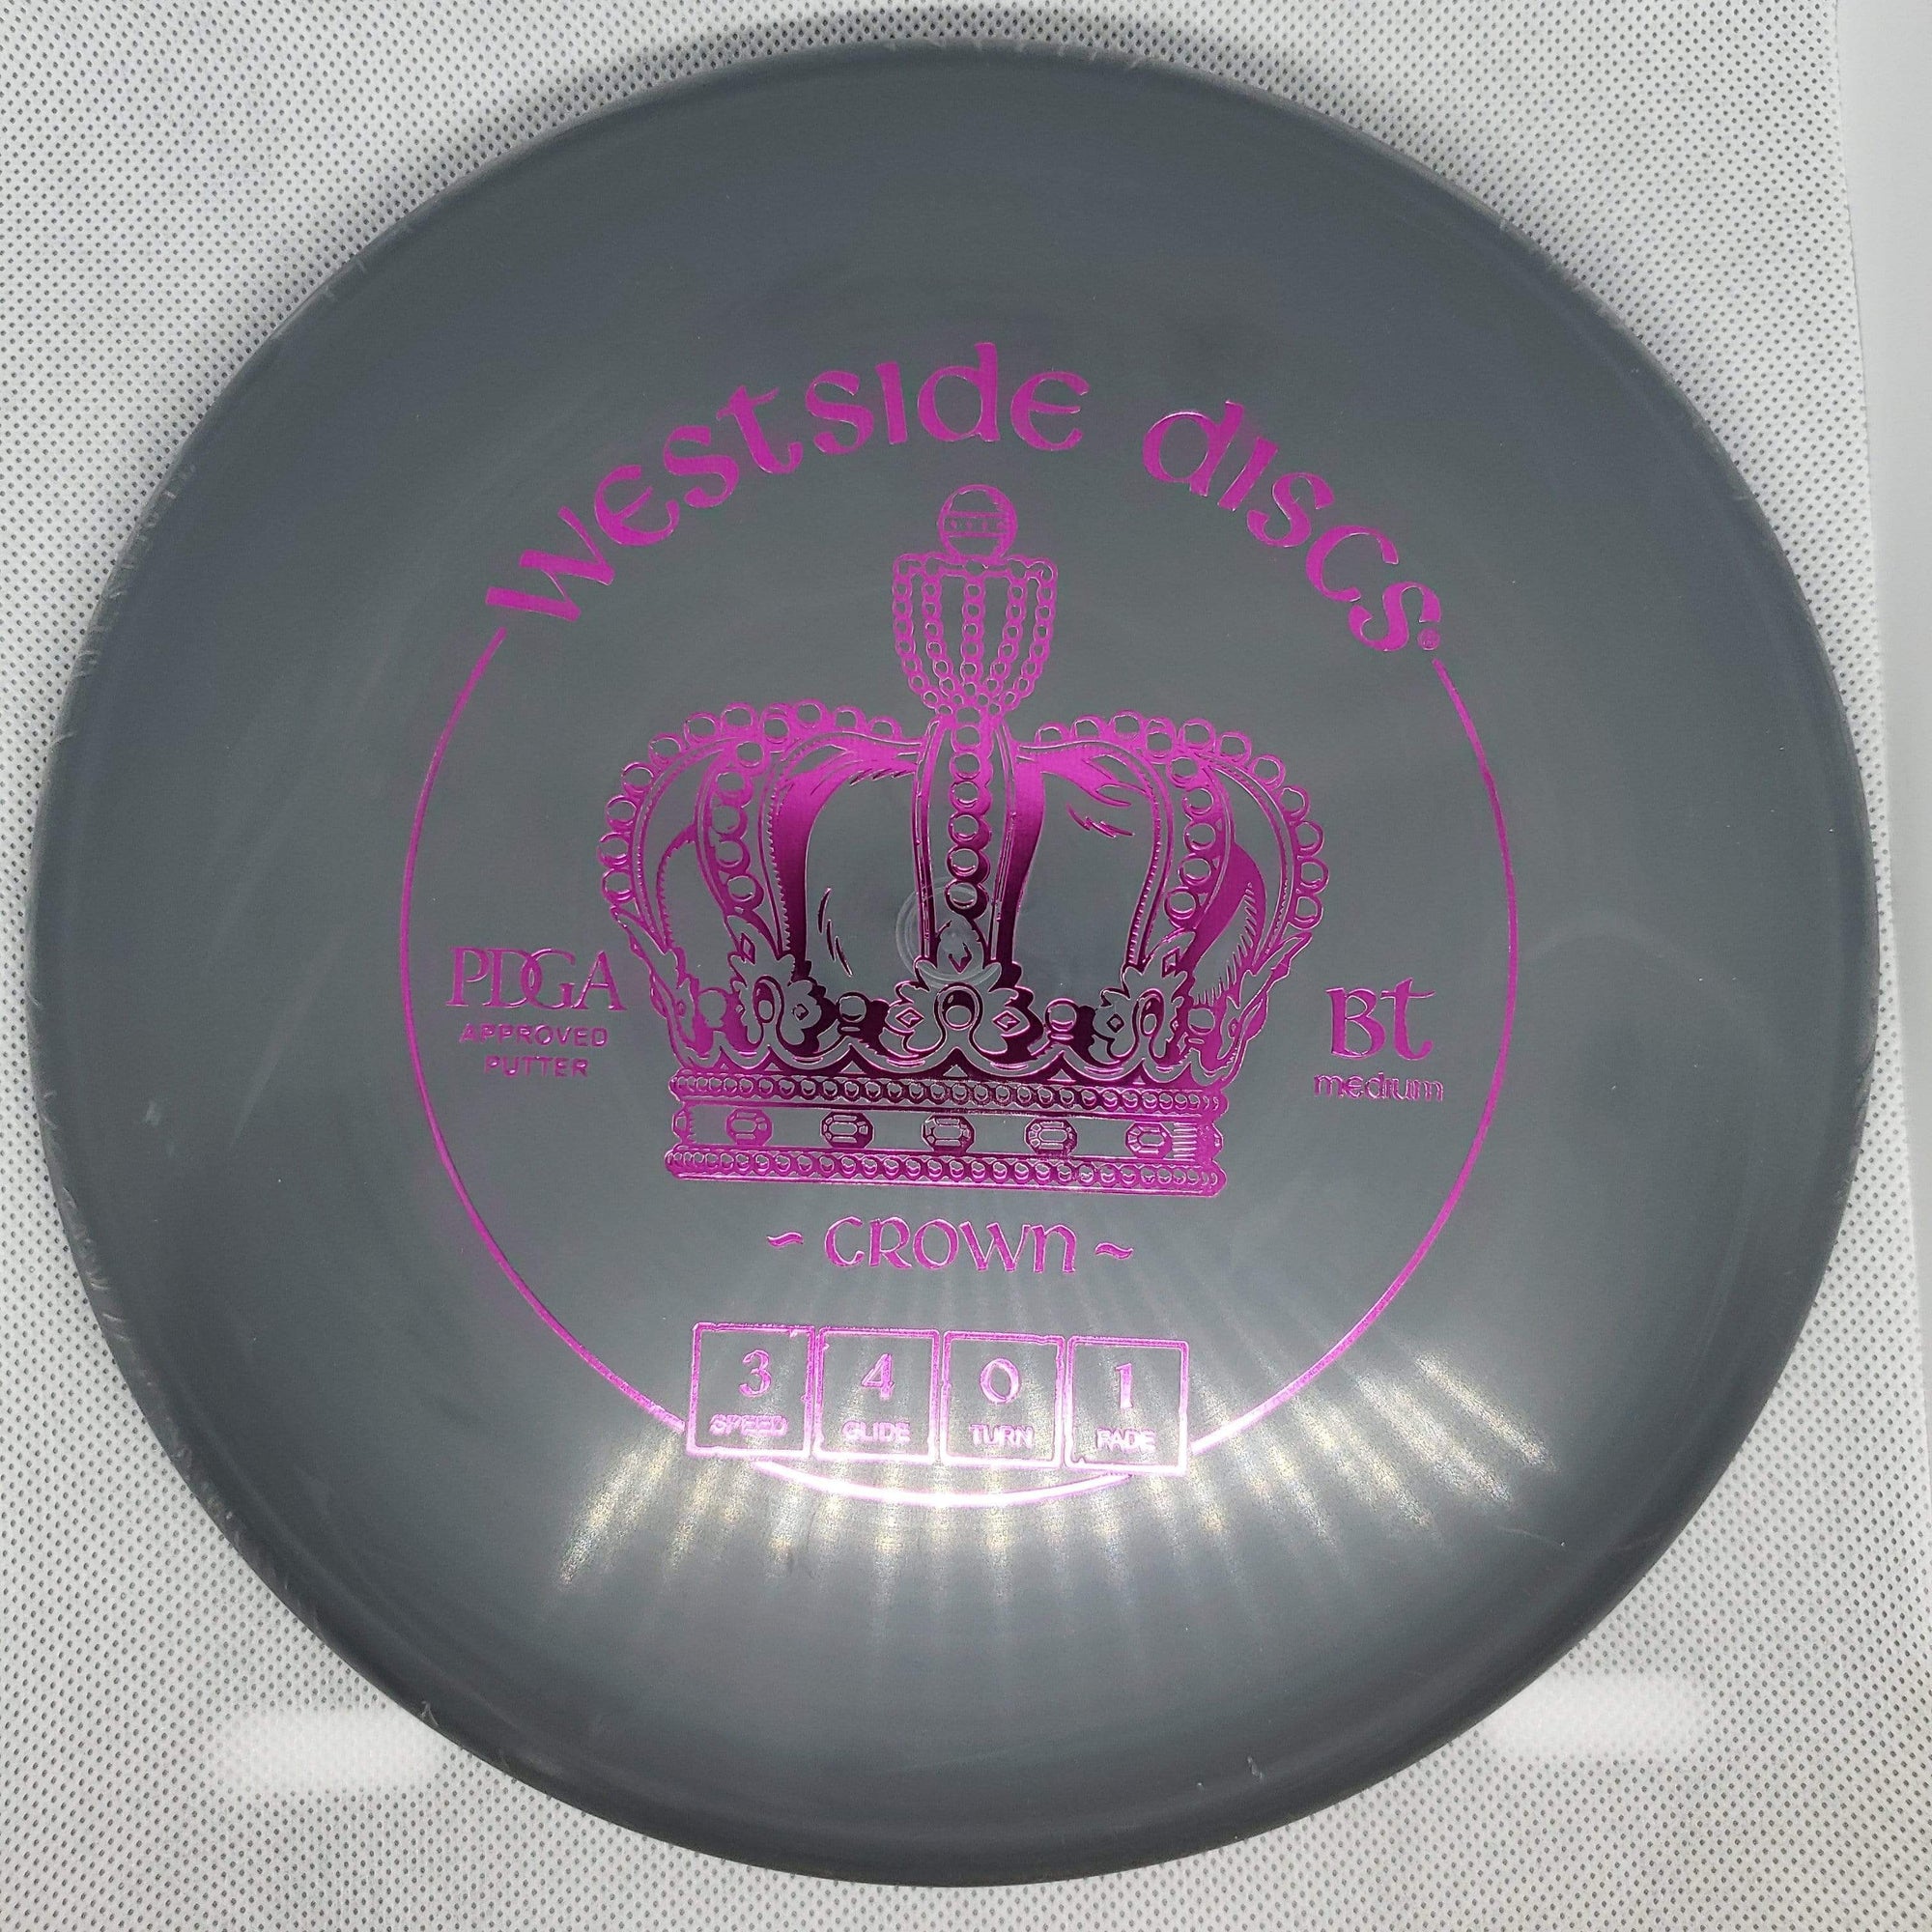 Westside Discs Putter Pink Red Stamp 173g BT Medium Crown